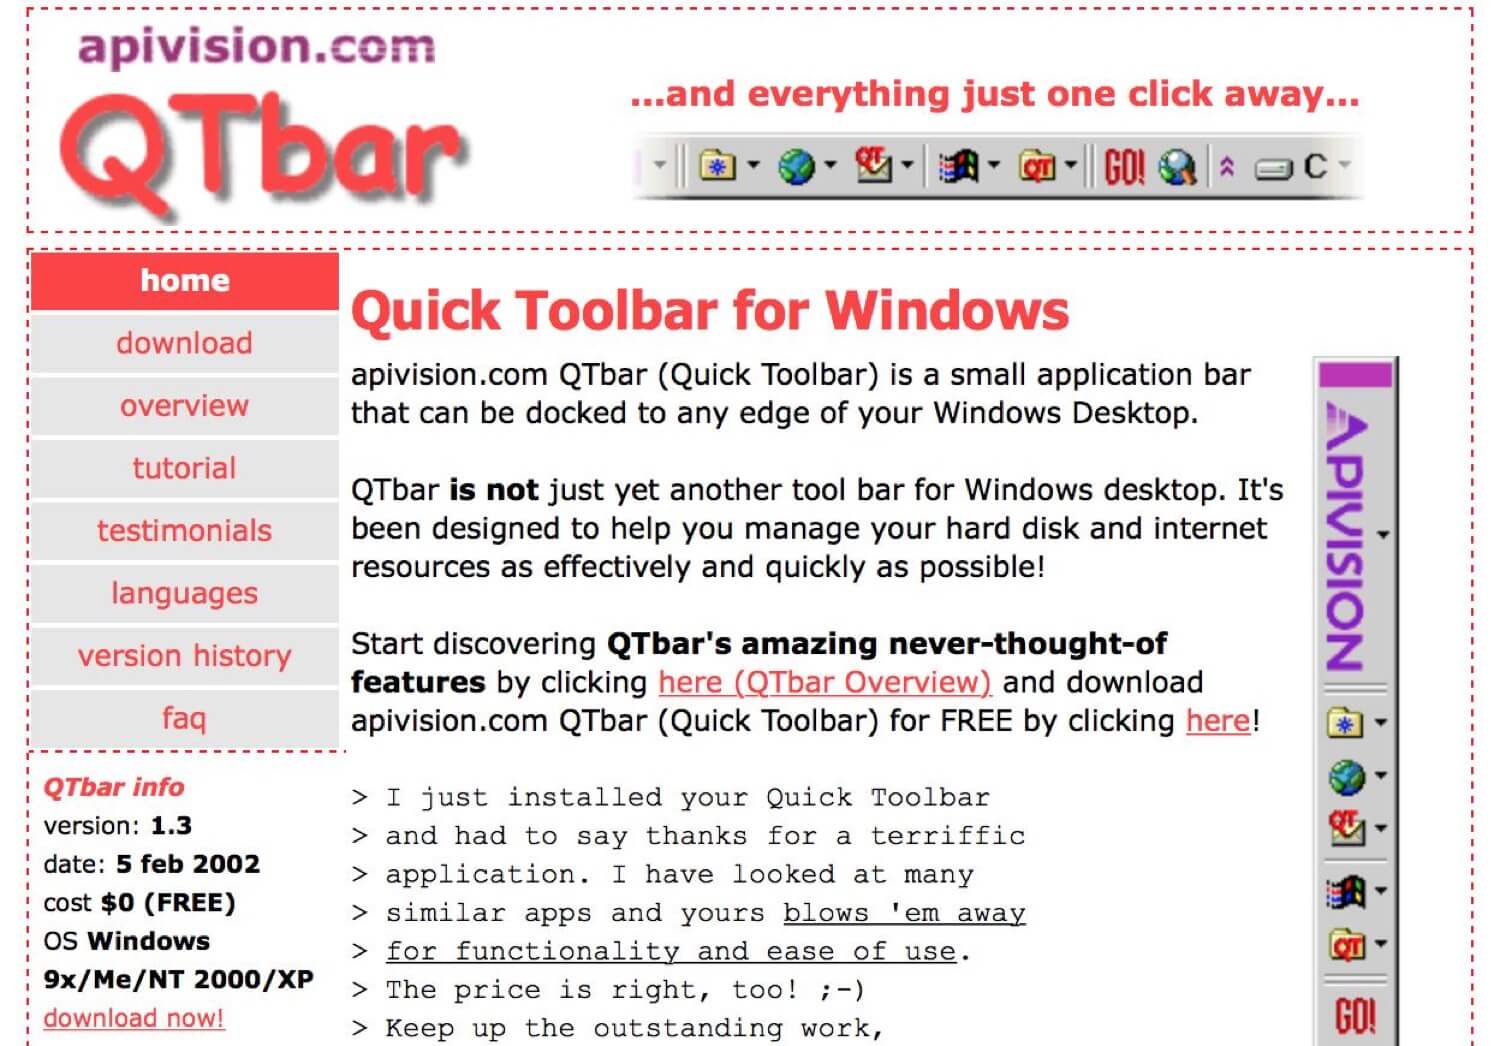 QTbar - my first small global “success” - a launcher toolbar app for Windows 98/Me/XP